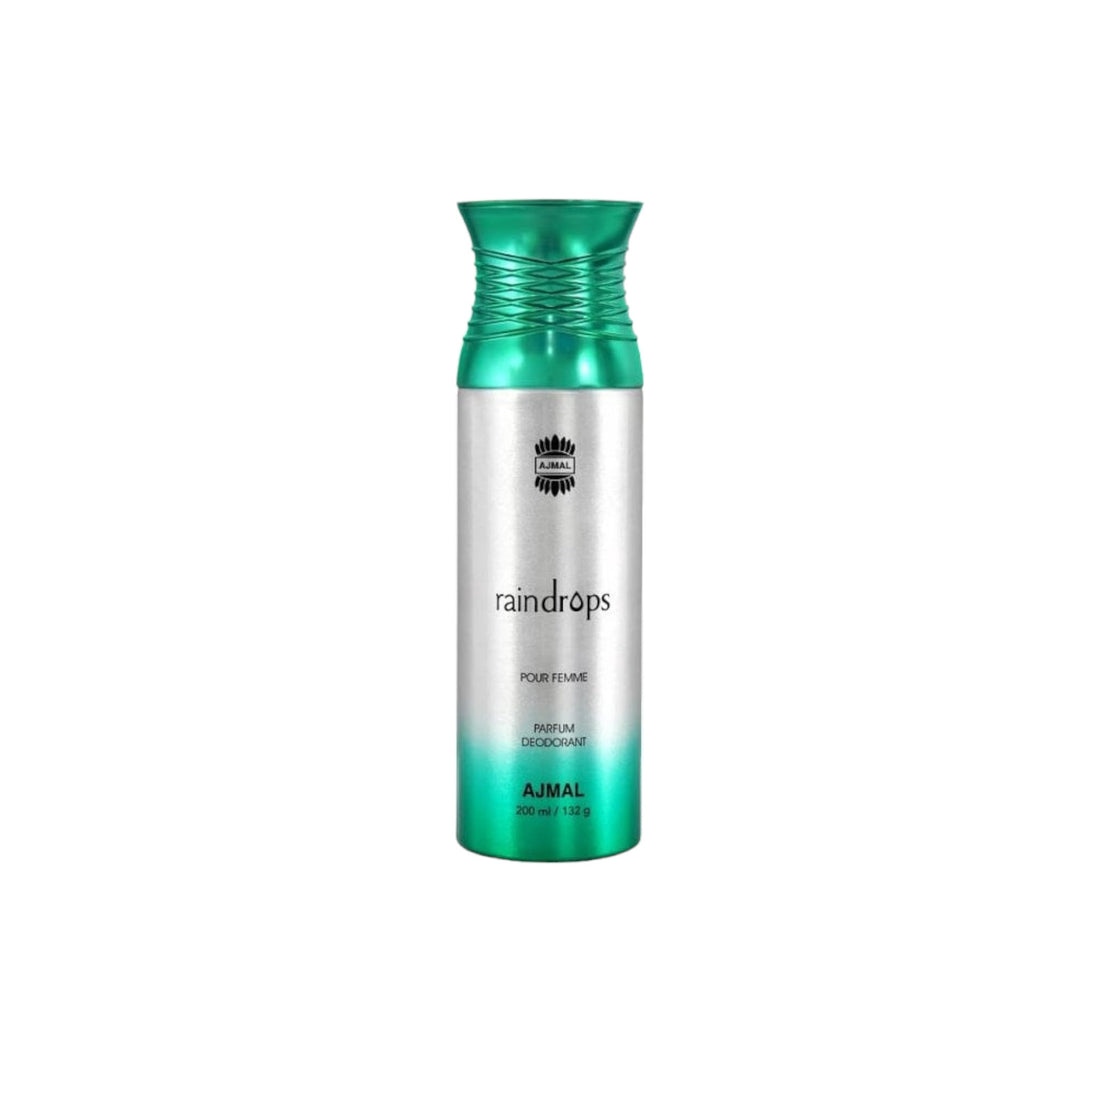 Stylish 200ml bottle of Ajmal Raindrops Deodorant, showcasing its modern and elegant design.